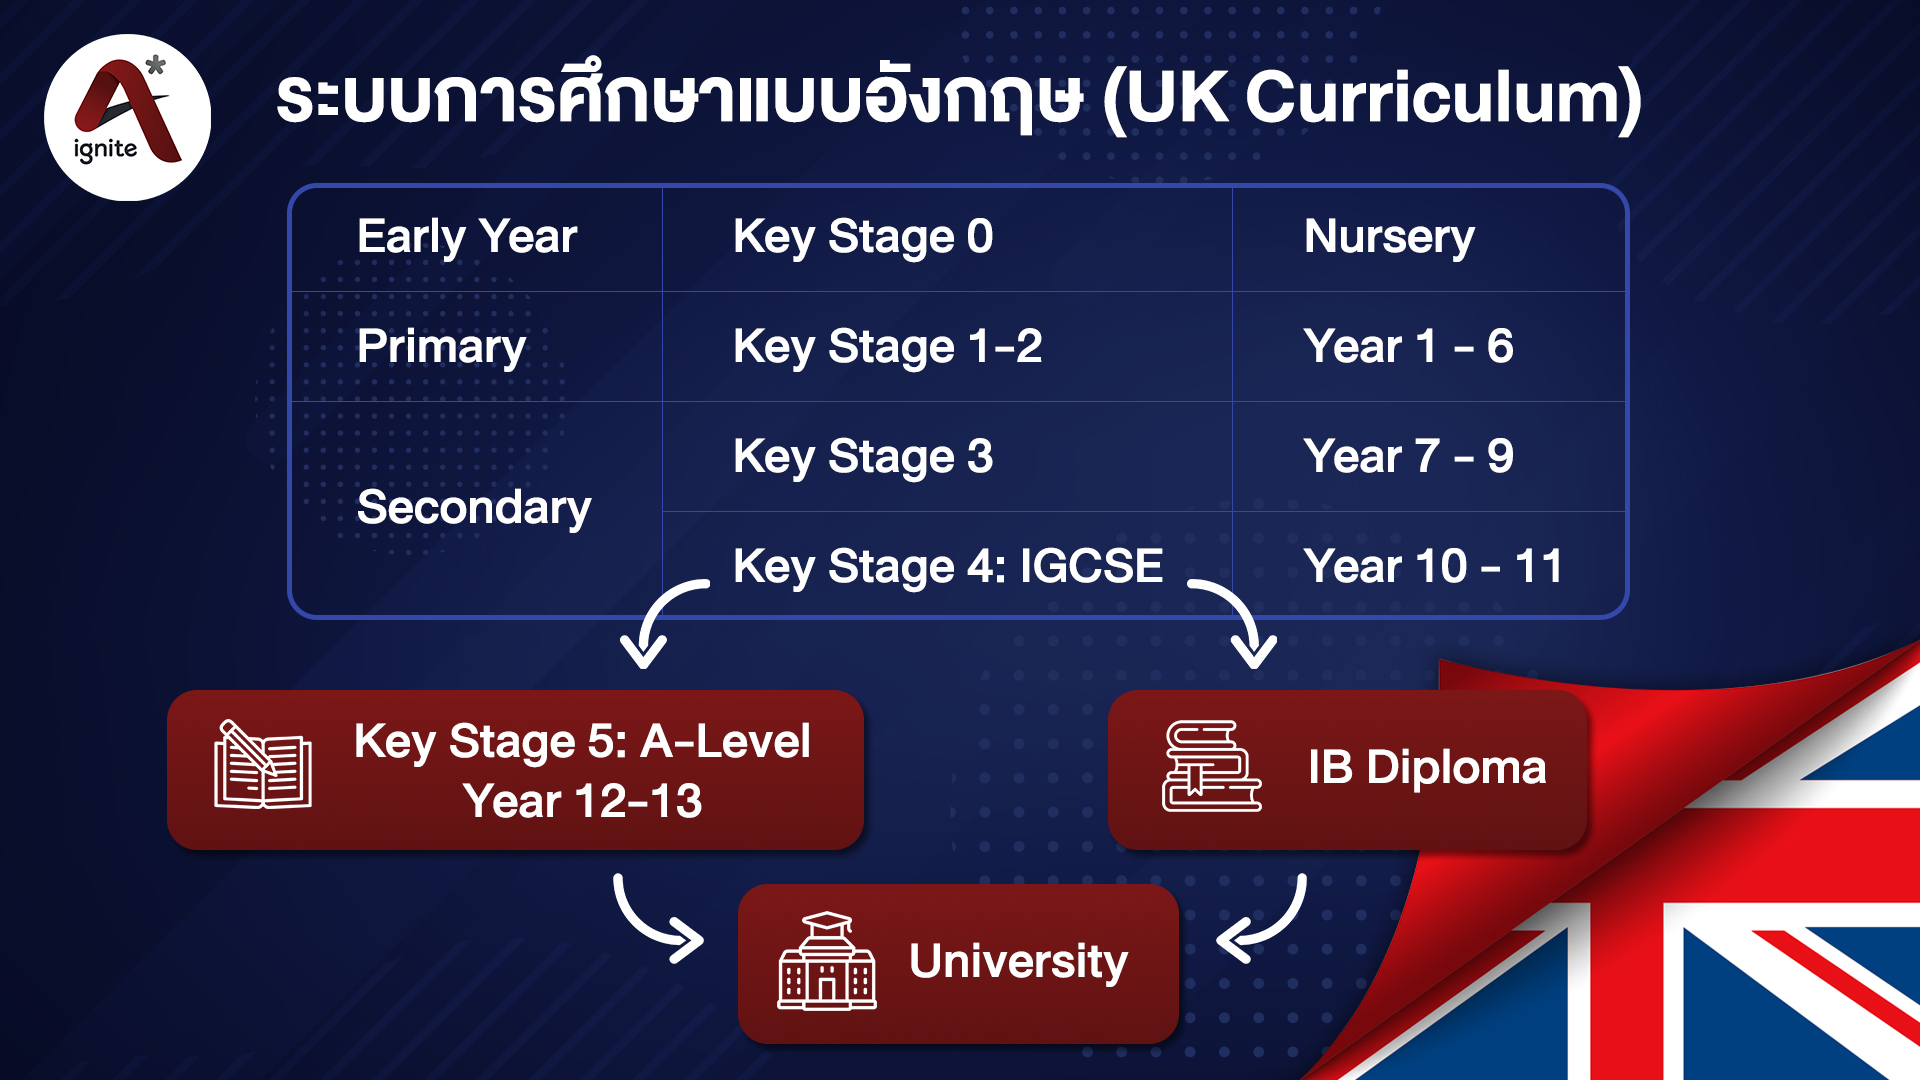 IGCSE และ A-Level - ระบบการศึกษาแบบอังกฤษ - UK Curriculum - ignite A Star - Bigcover2